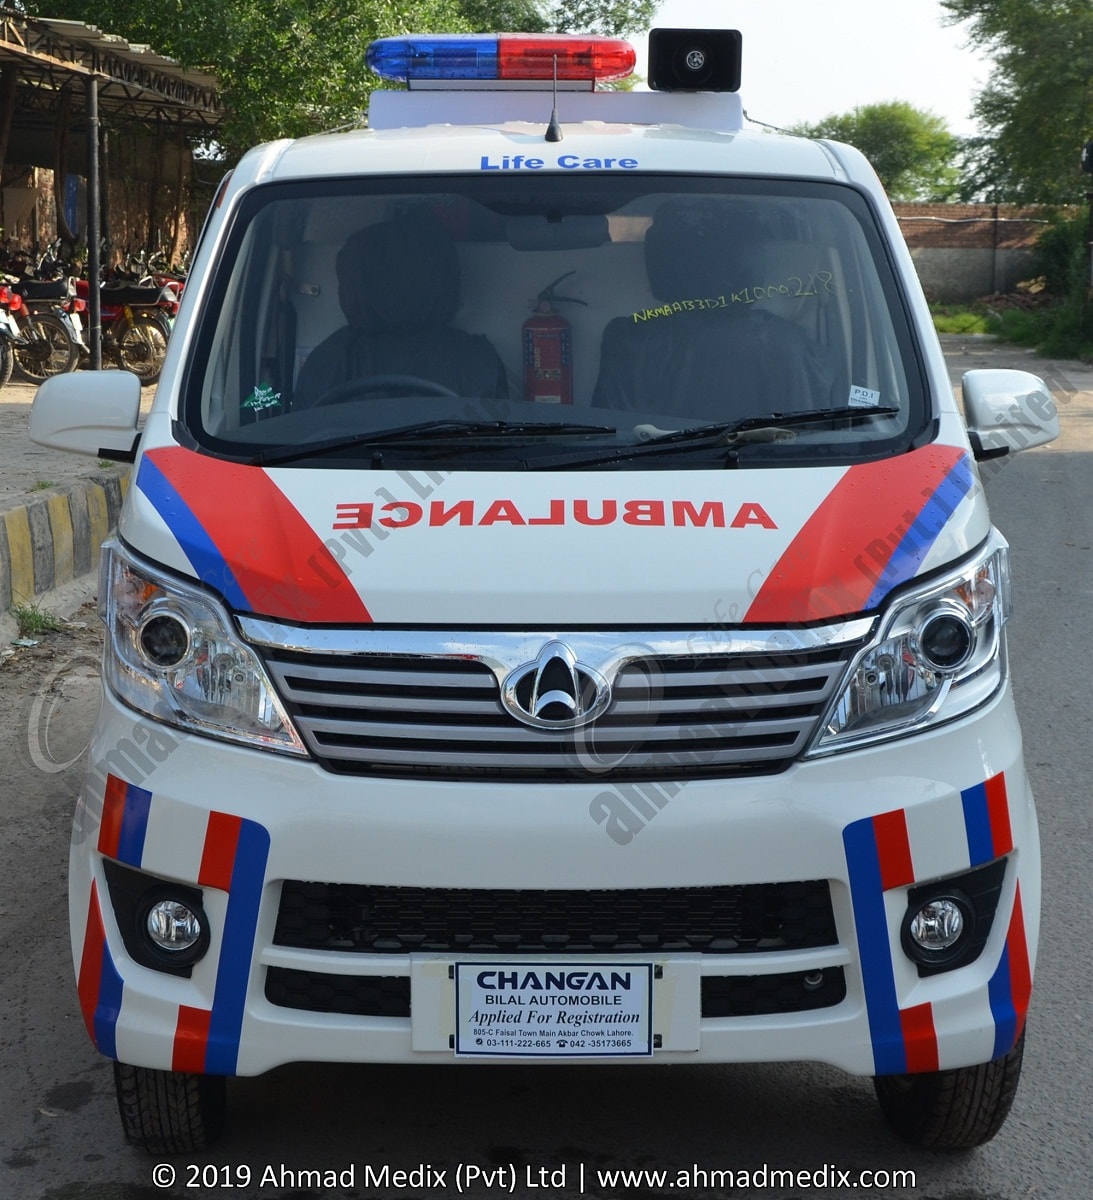 Changhan Ambulance